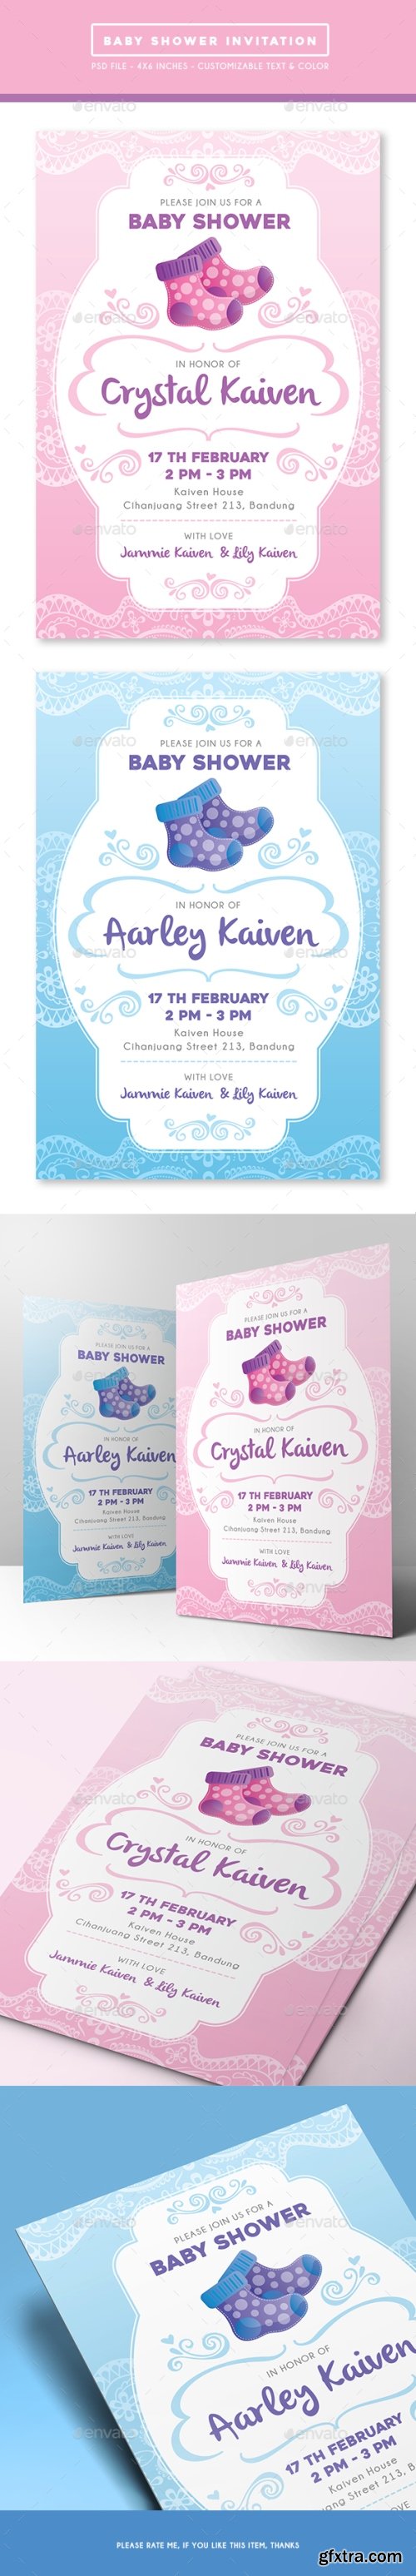 Graphicriver - Baby Shower Invitation 15355796